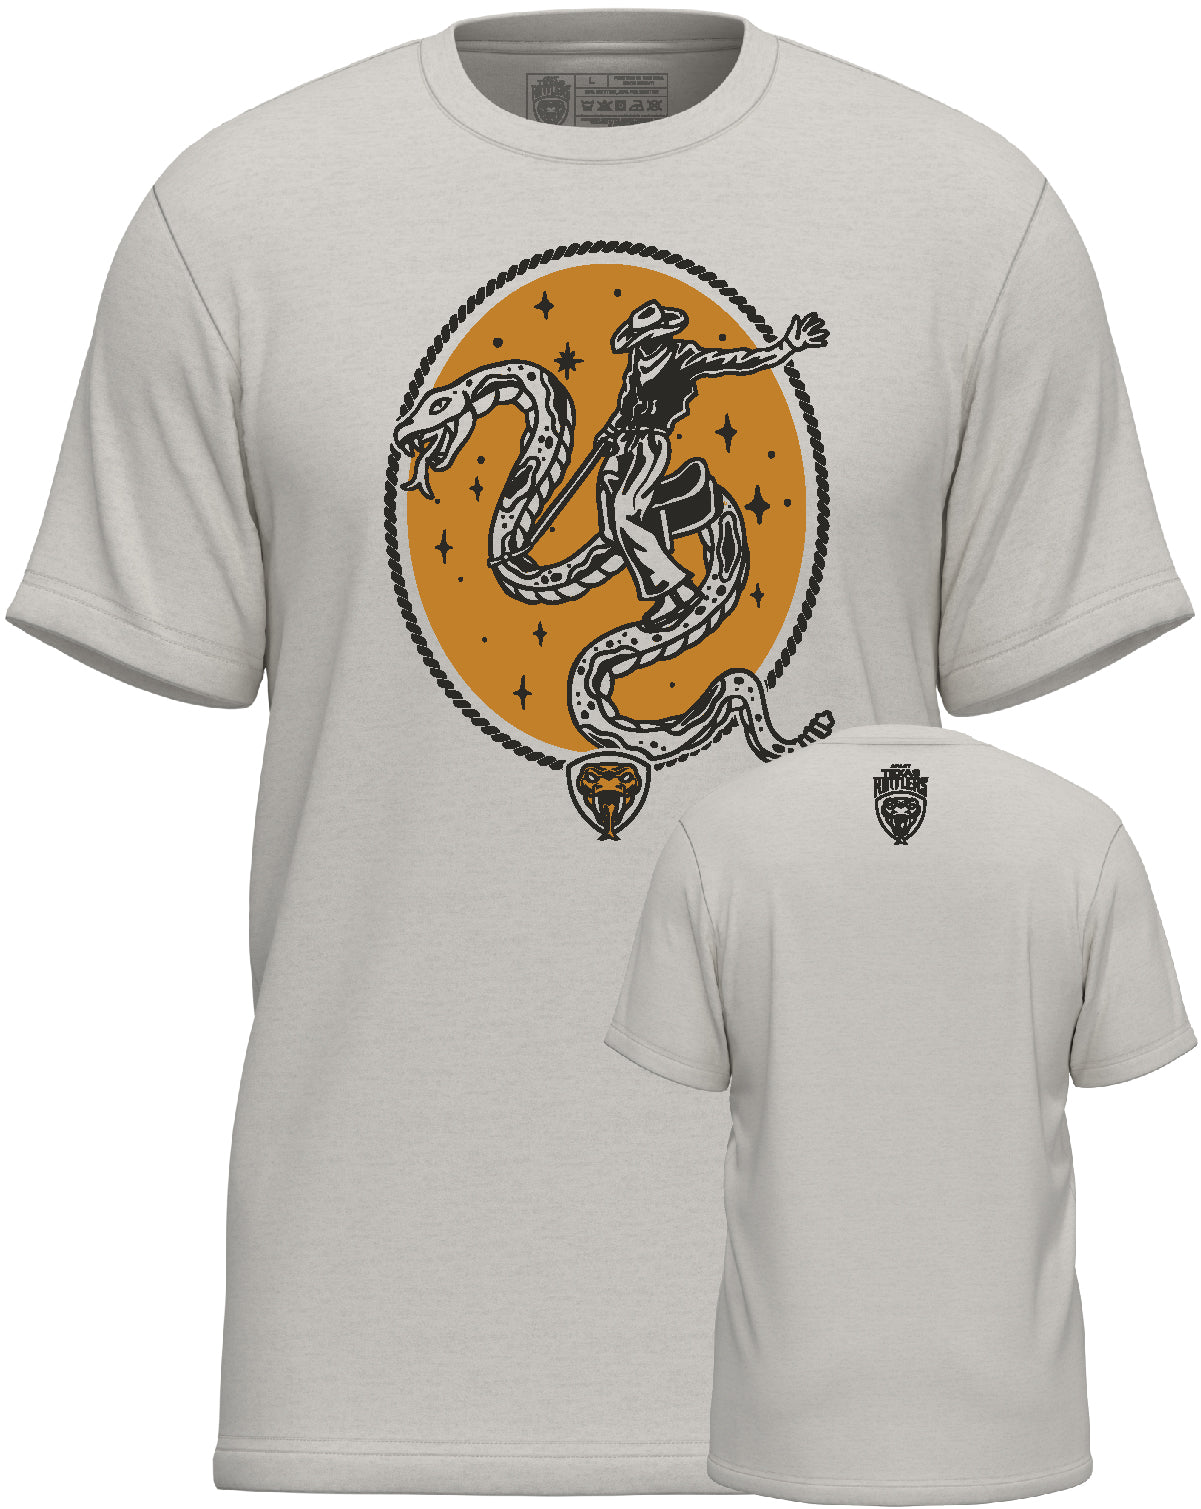 Rattlers Snake Cowboy T-Shirt